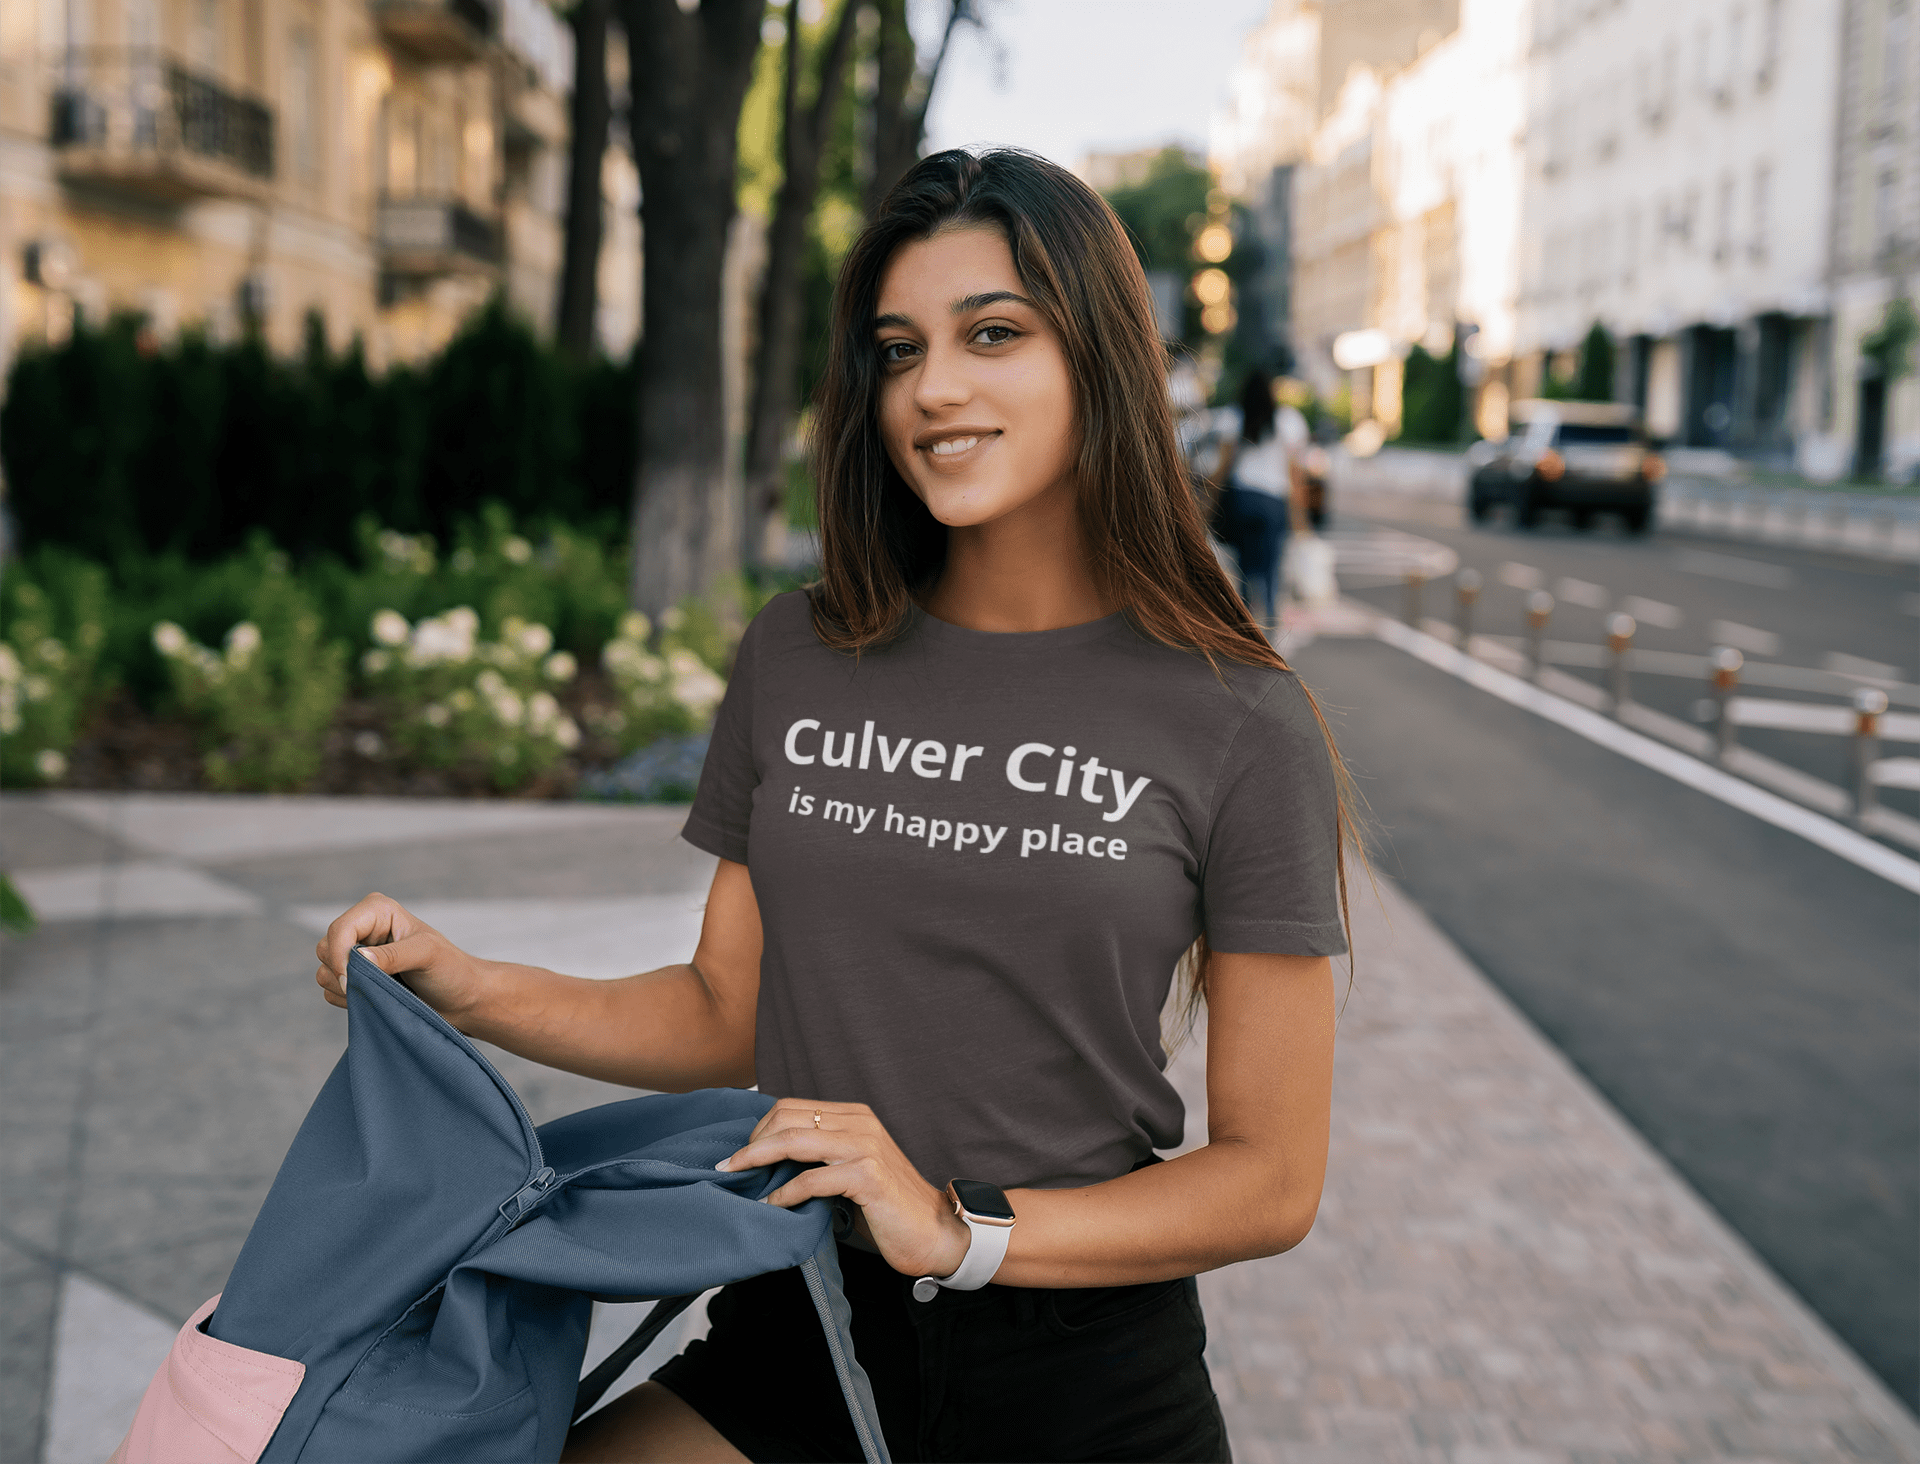 CULVER CITY IS MY HAPPY PLACE - 11 of Twelve